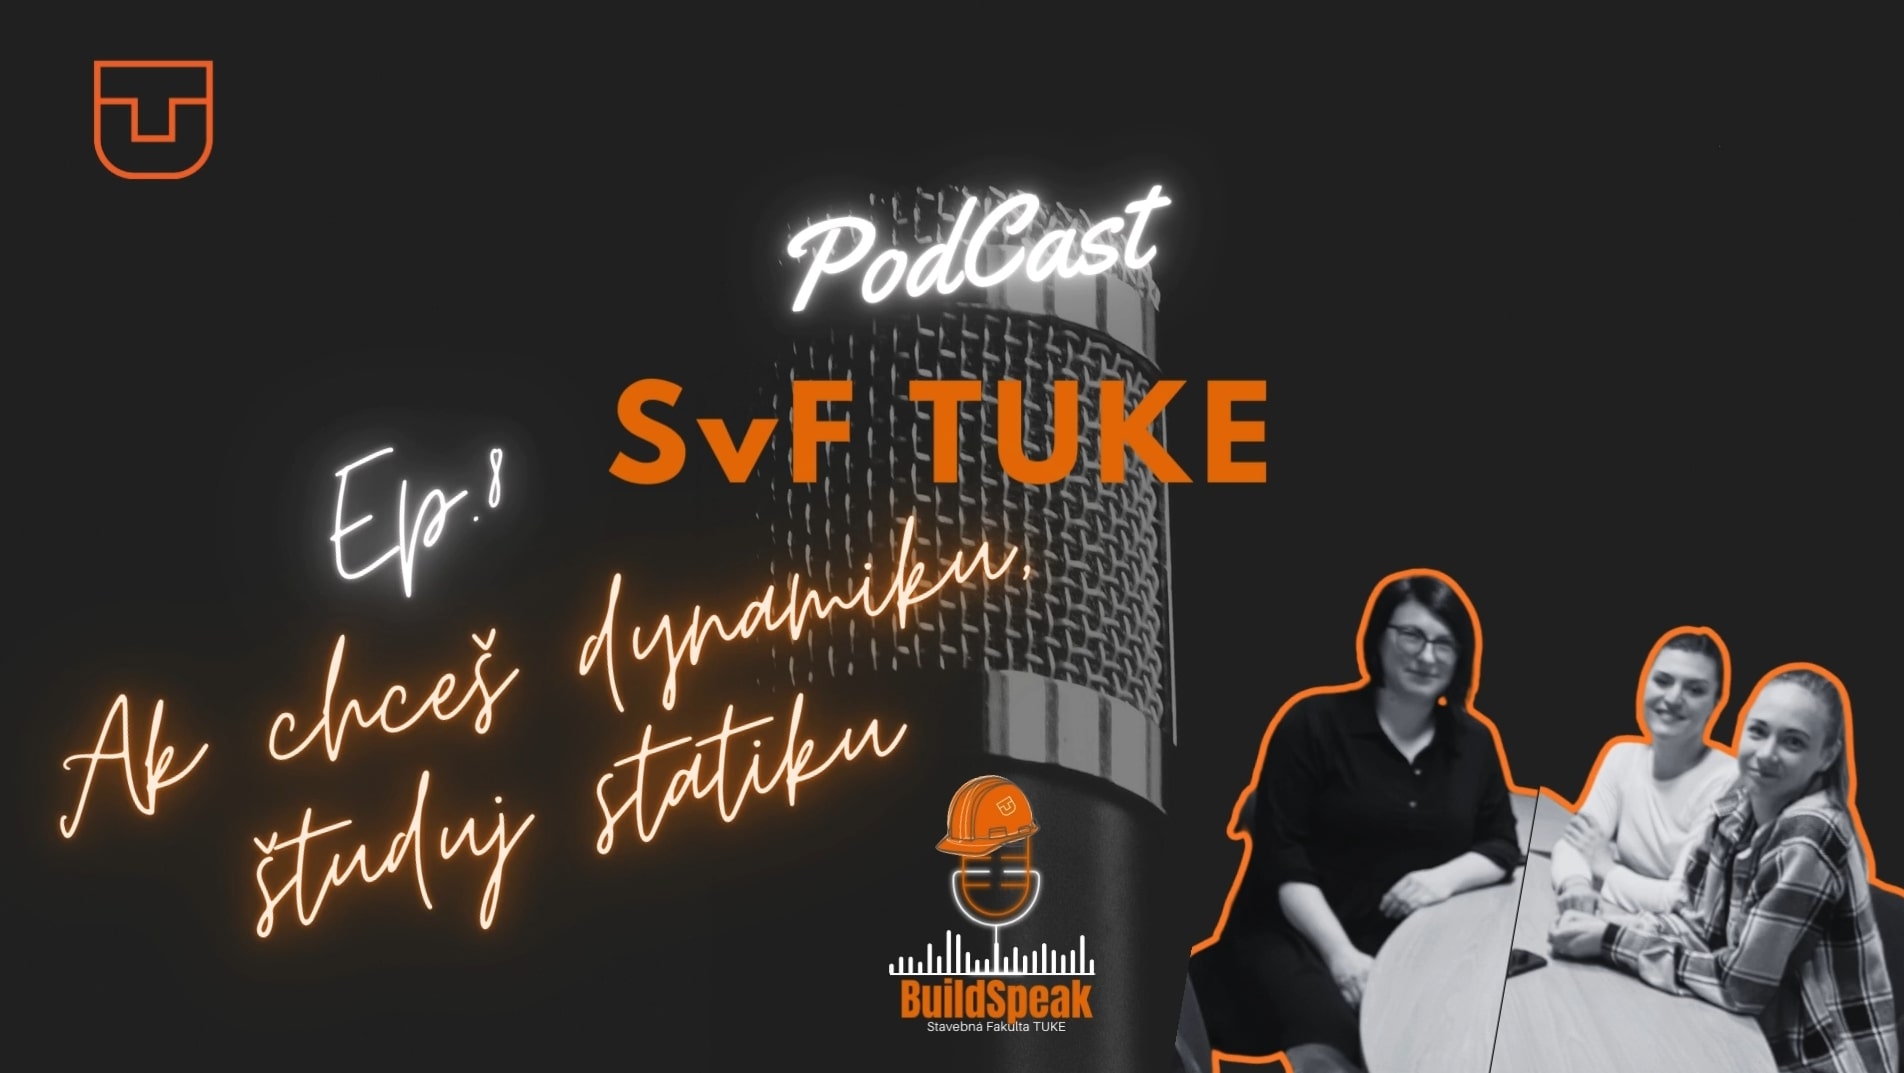 BuildSpeak: podcast SvF TUKE - Ep.08: Chceš dynamiku, študuj statiku!